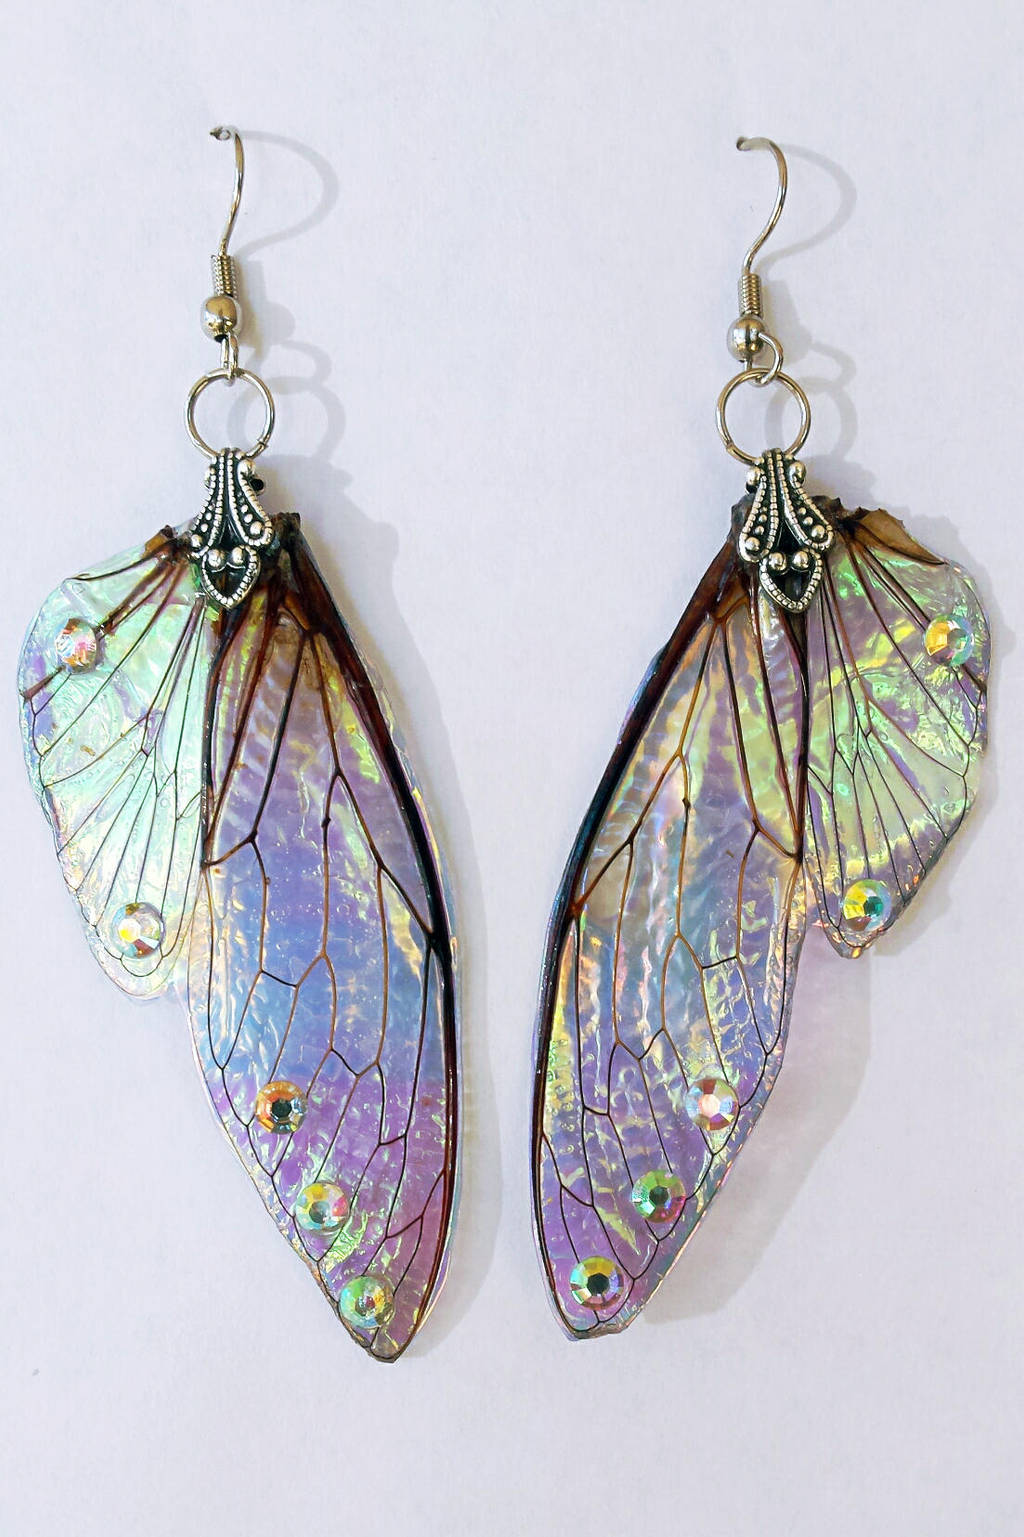 Double Fairy Wing Earrings by KristenJarvisART on DeviantArt